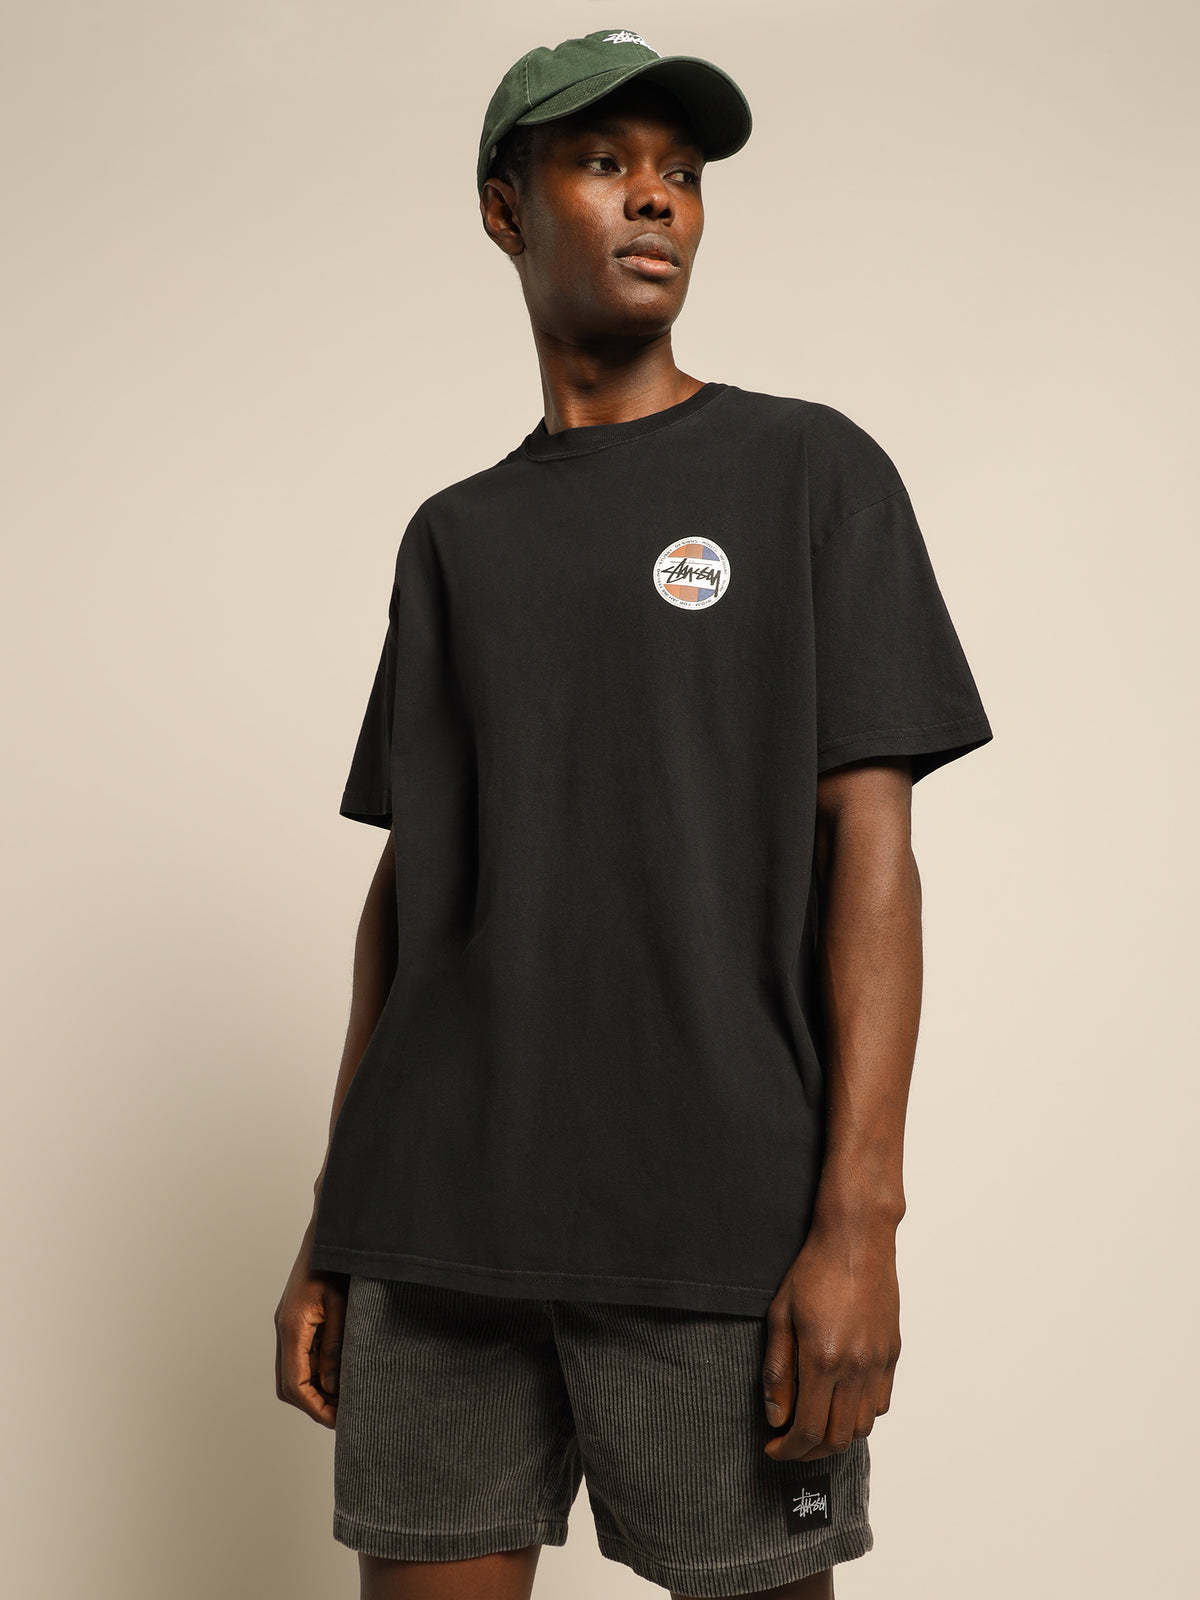 Stock Dot T-Shirt in Pigment Black